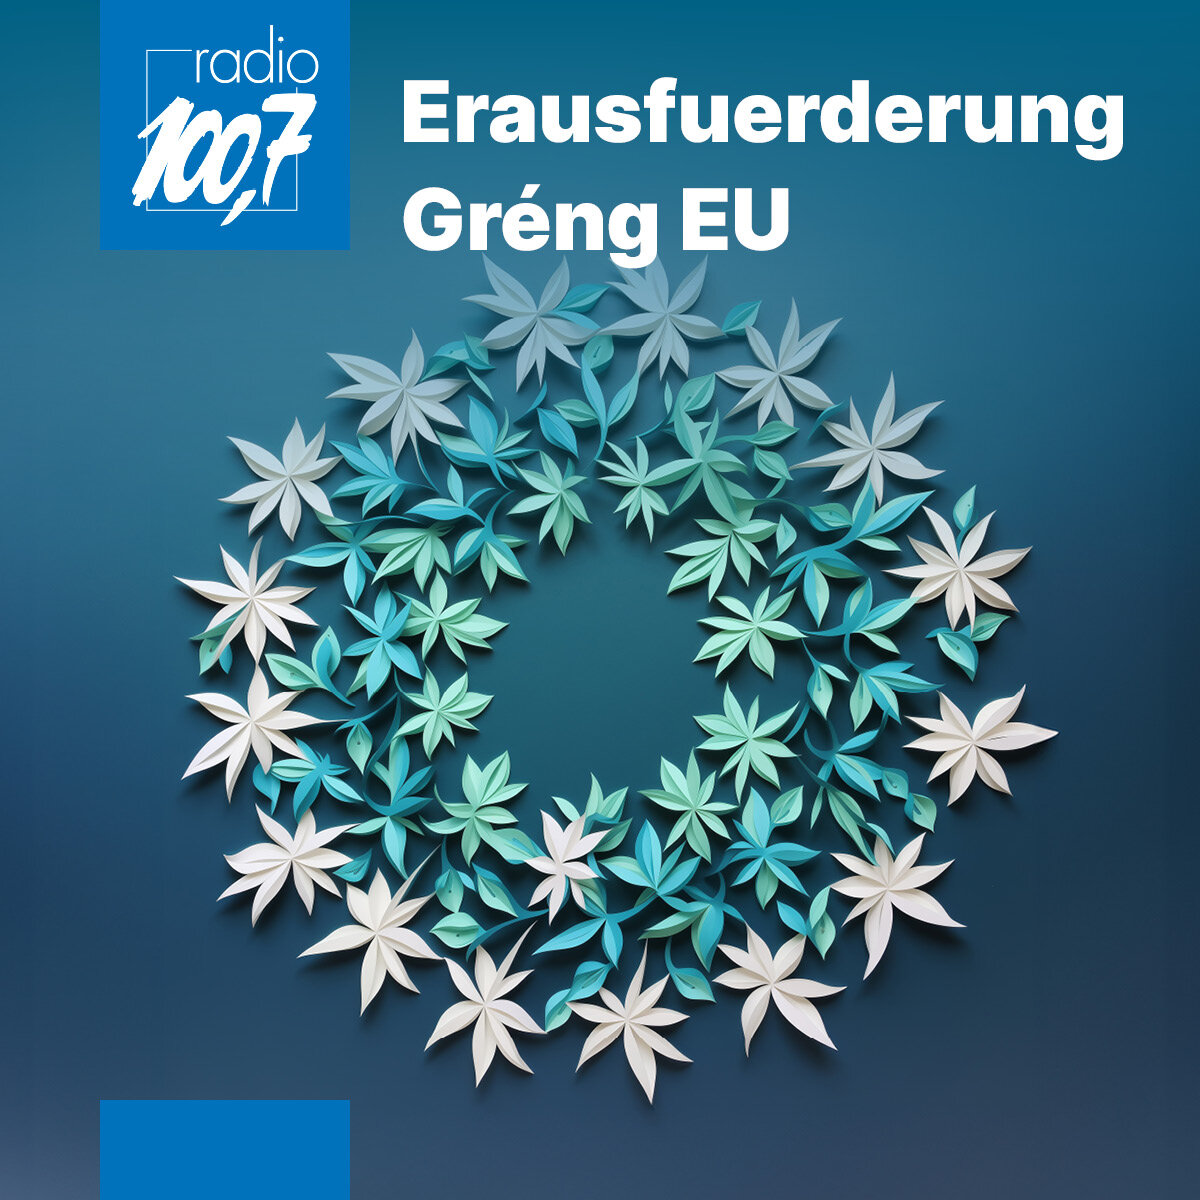 EU Green Deal Podcast